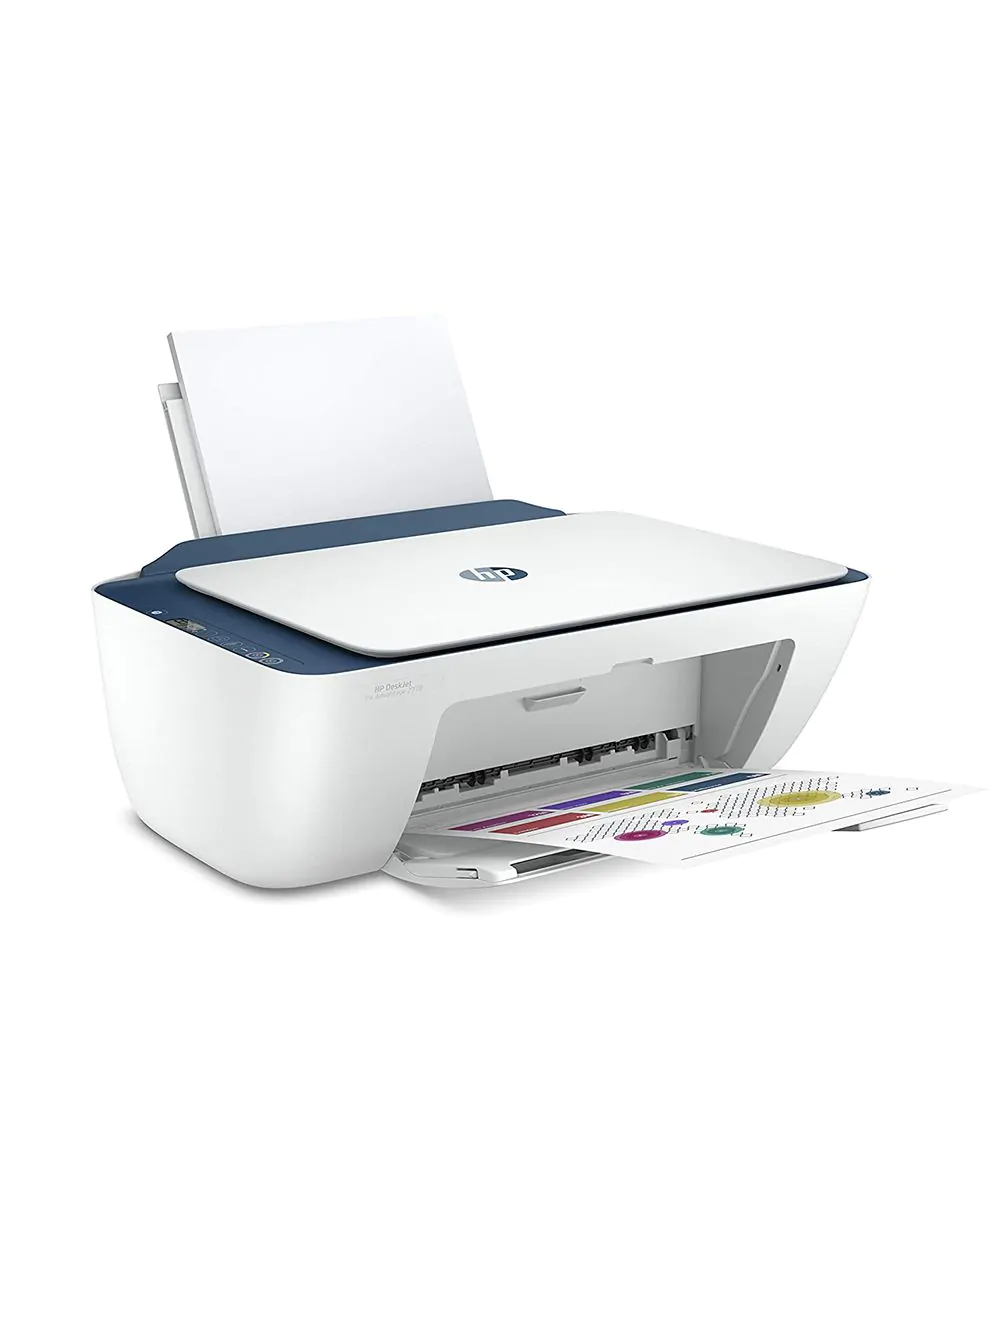 Buy HP DeskJet Efficient 2778 Printer Best Price